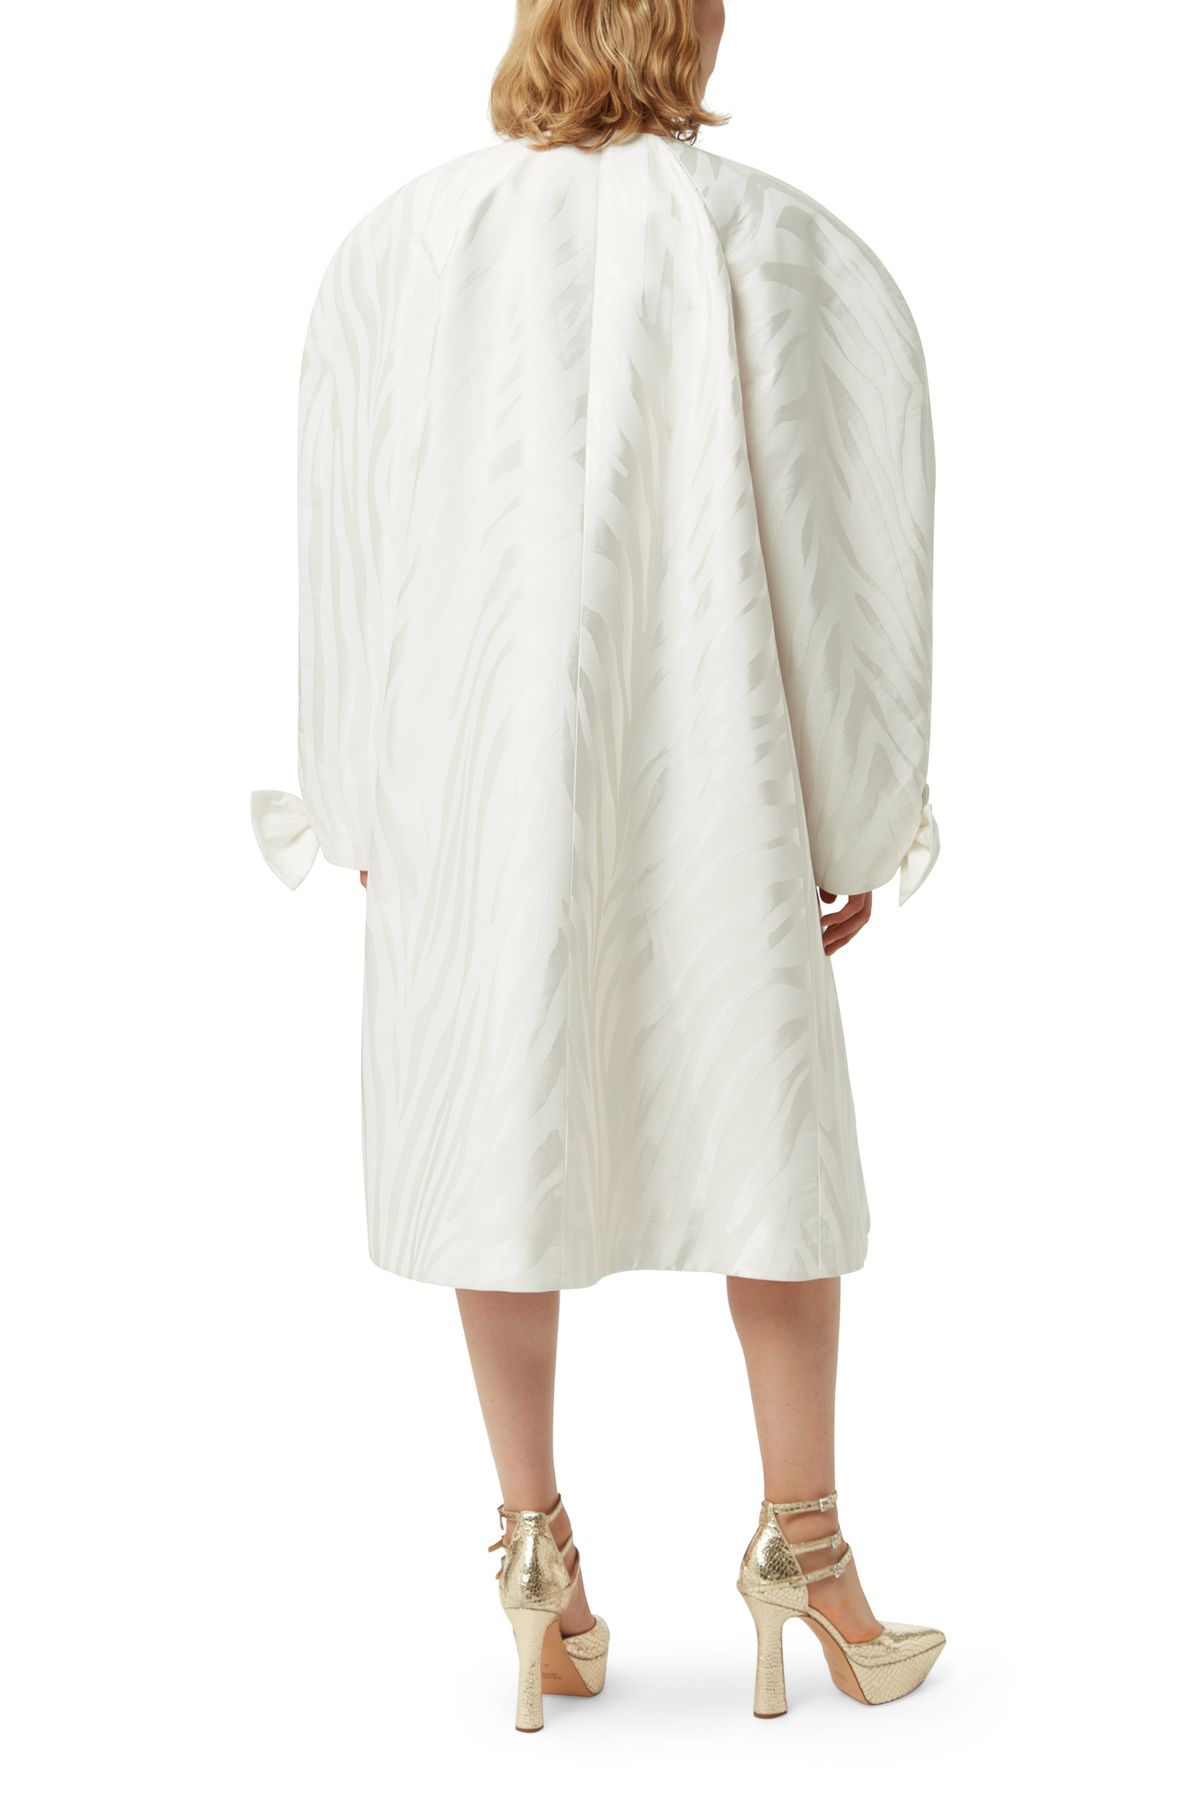 Nina Ricci Opera coat with cocoon sleeves